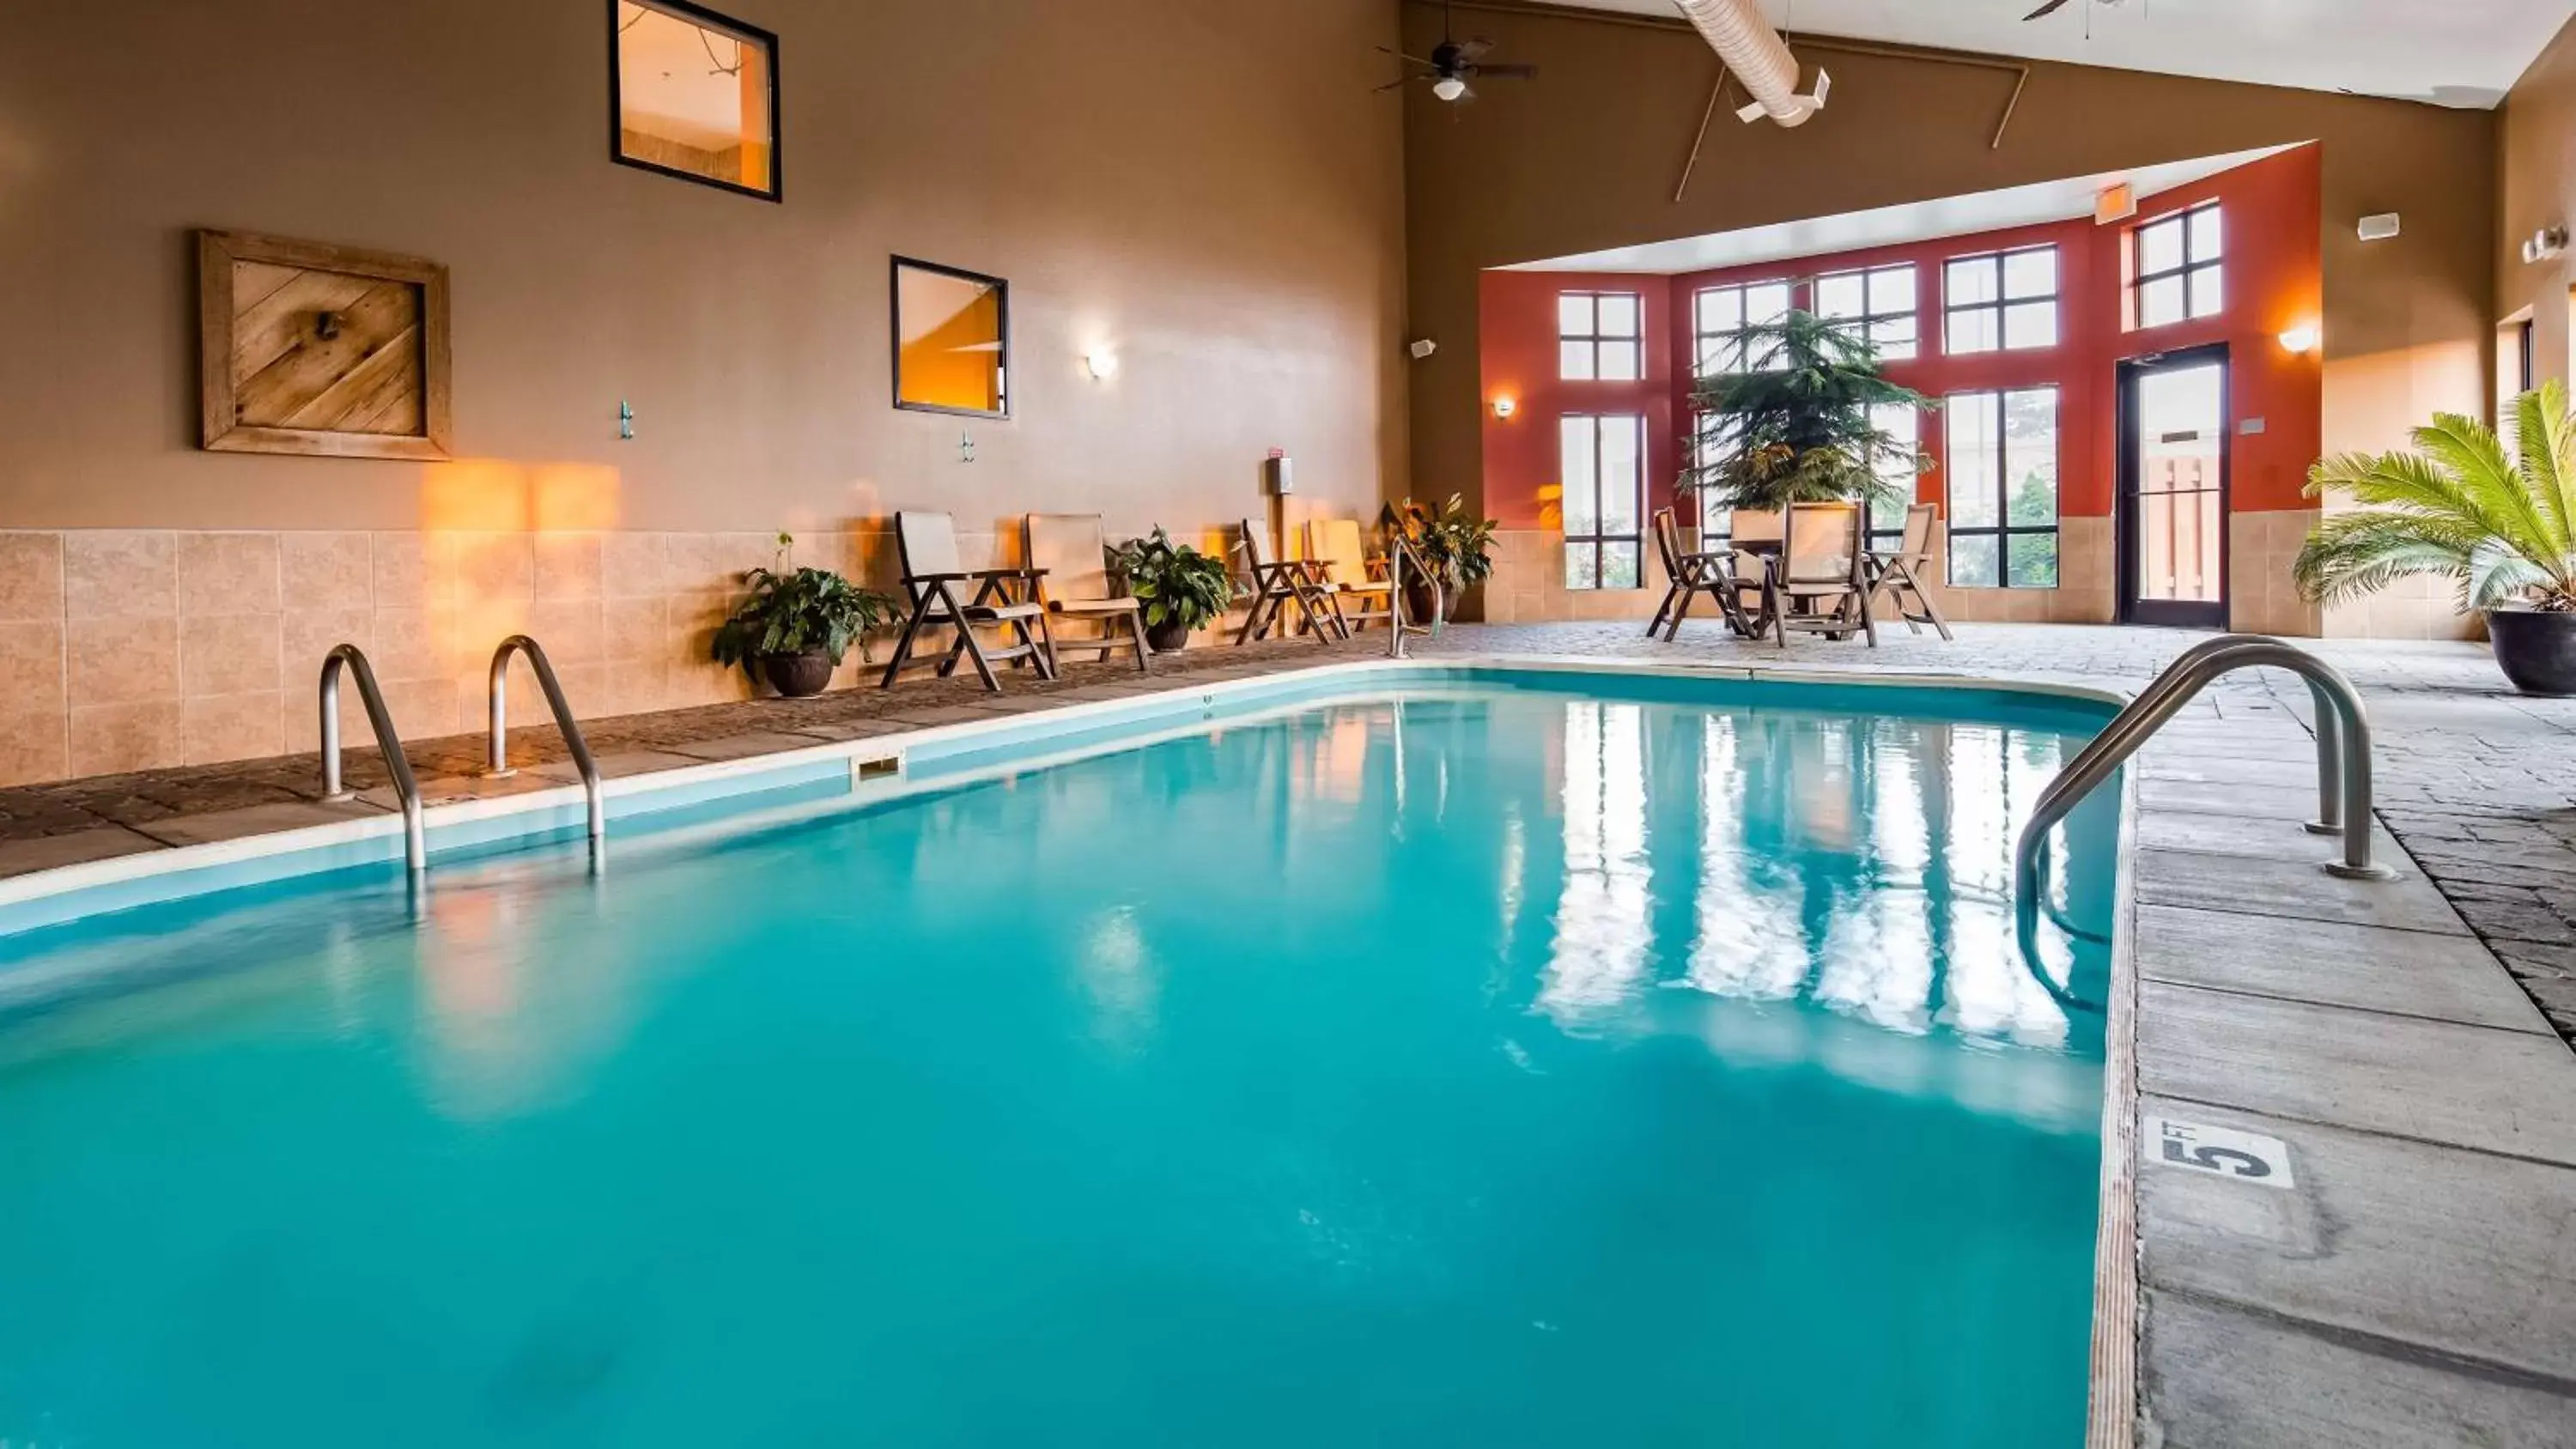 On site, Swimming Pool in Best Western Plus Country Inn & Suites